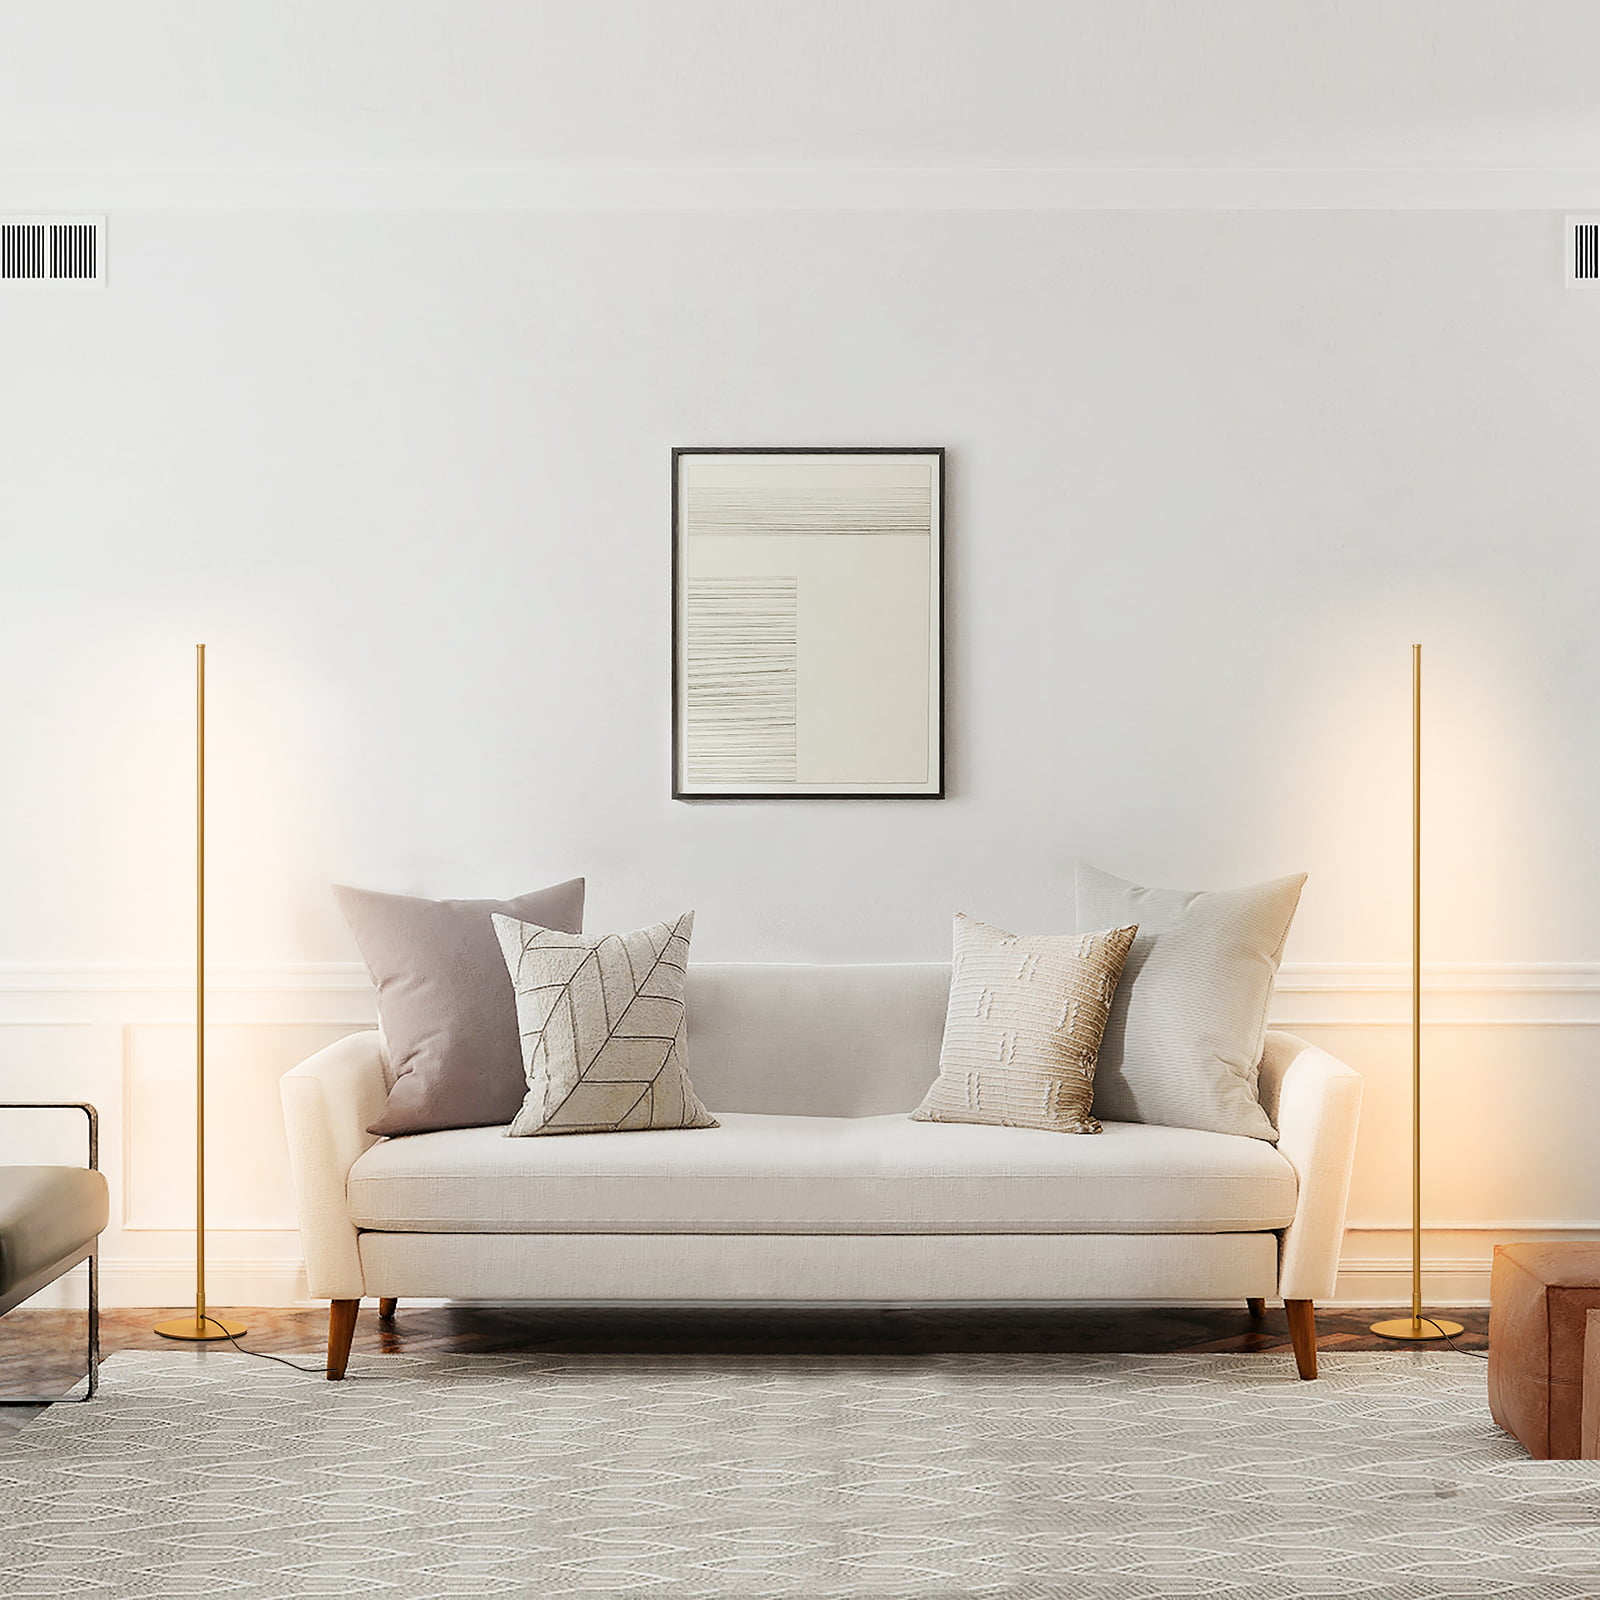 DEWENWILS LED Corner Floor Lamp, Minimalist Dimmable Mood Light, 57.5  Standing Tall Lamp for Living Room, Bedroom, Home Office, 3000K Warm White  Light (Silver) 